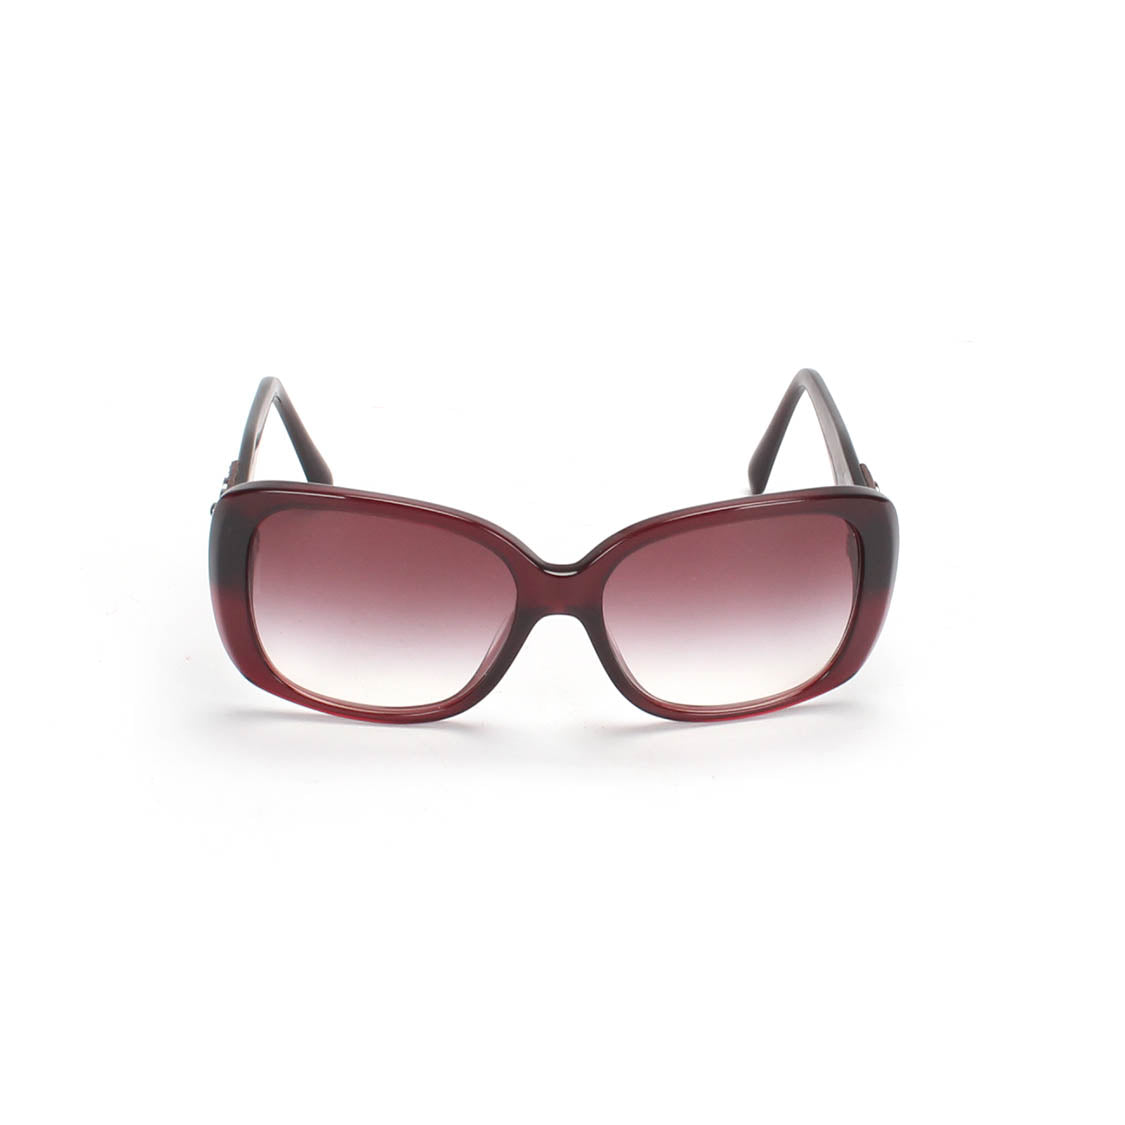 CC Square Tinted Sunglasses 5234-Q-A